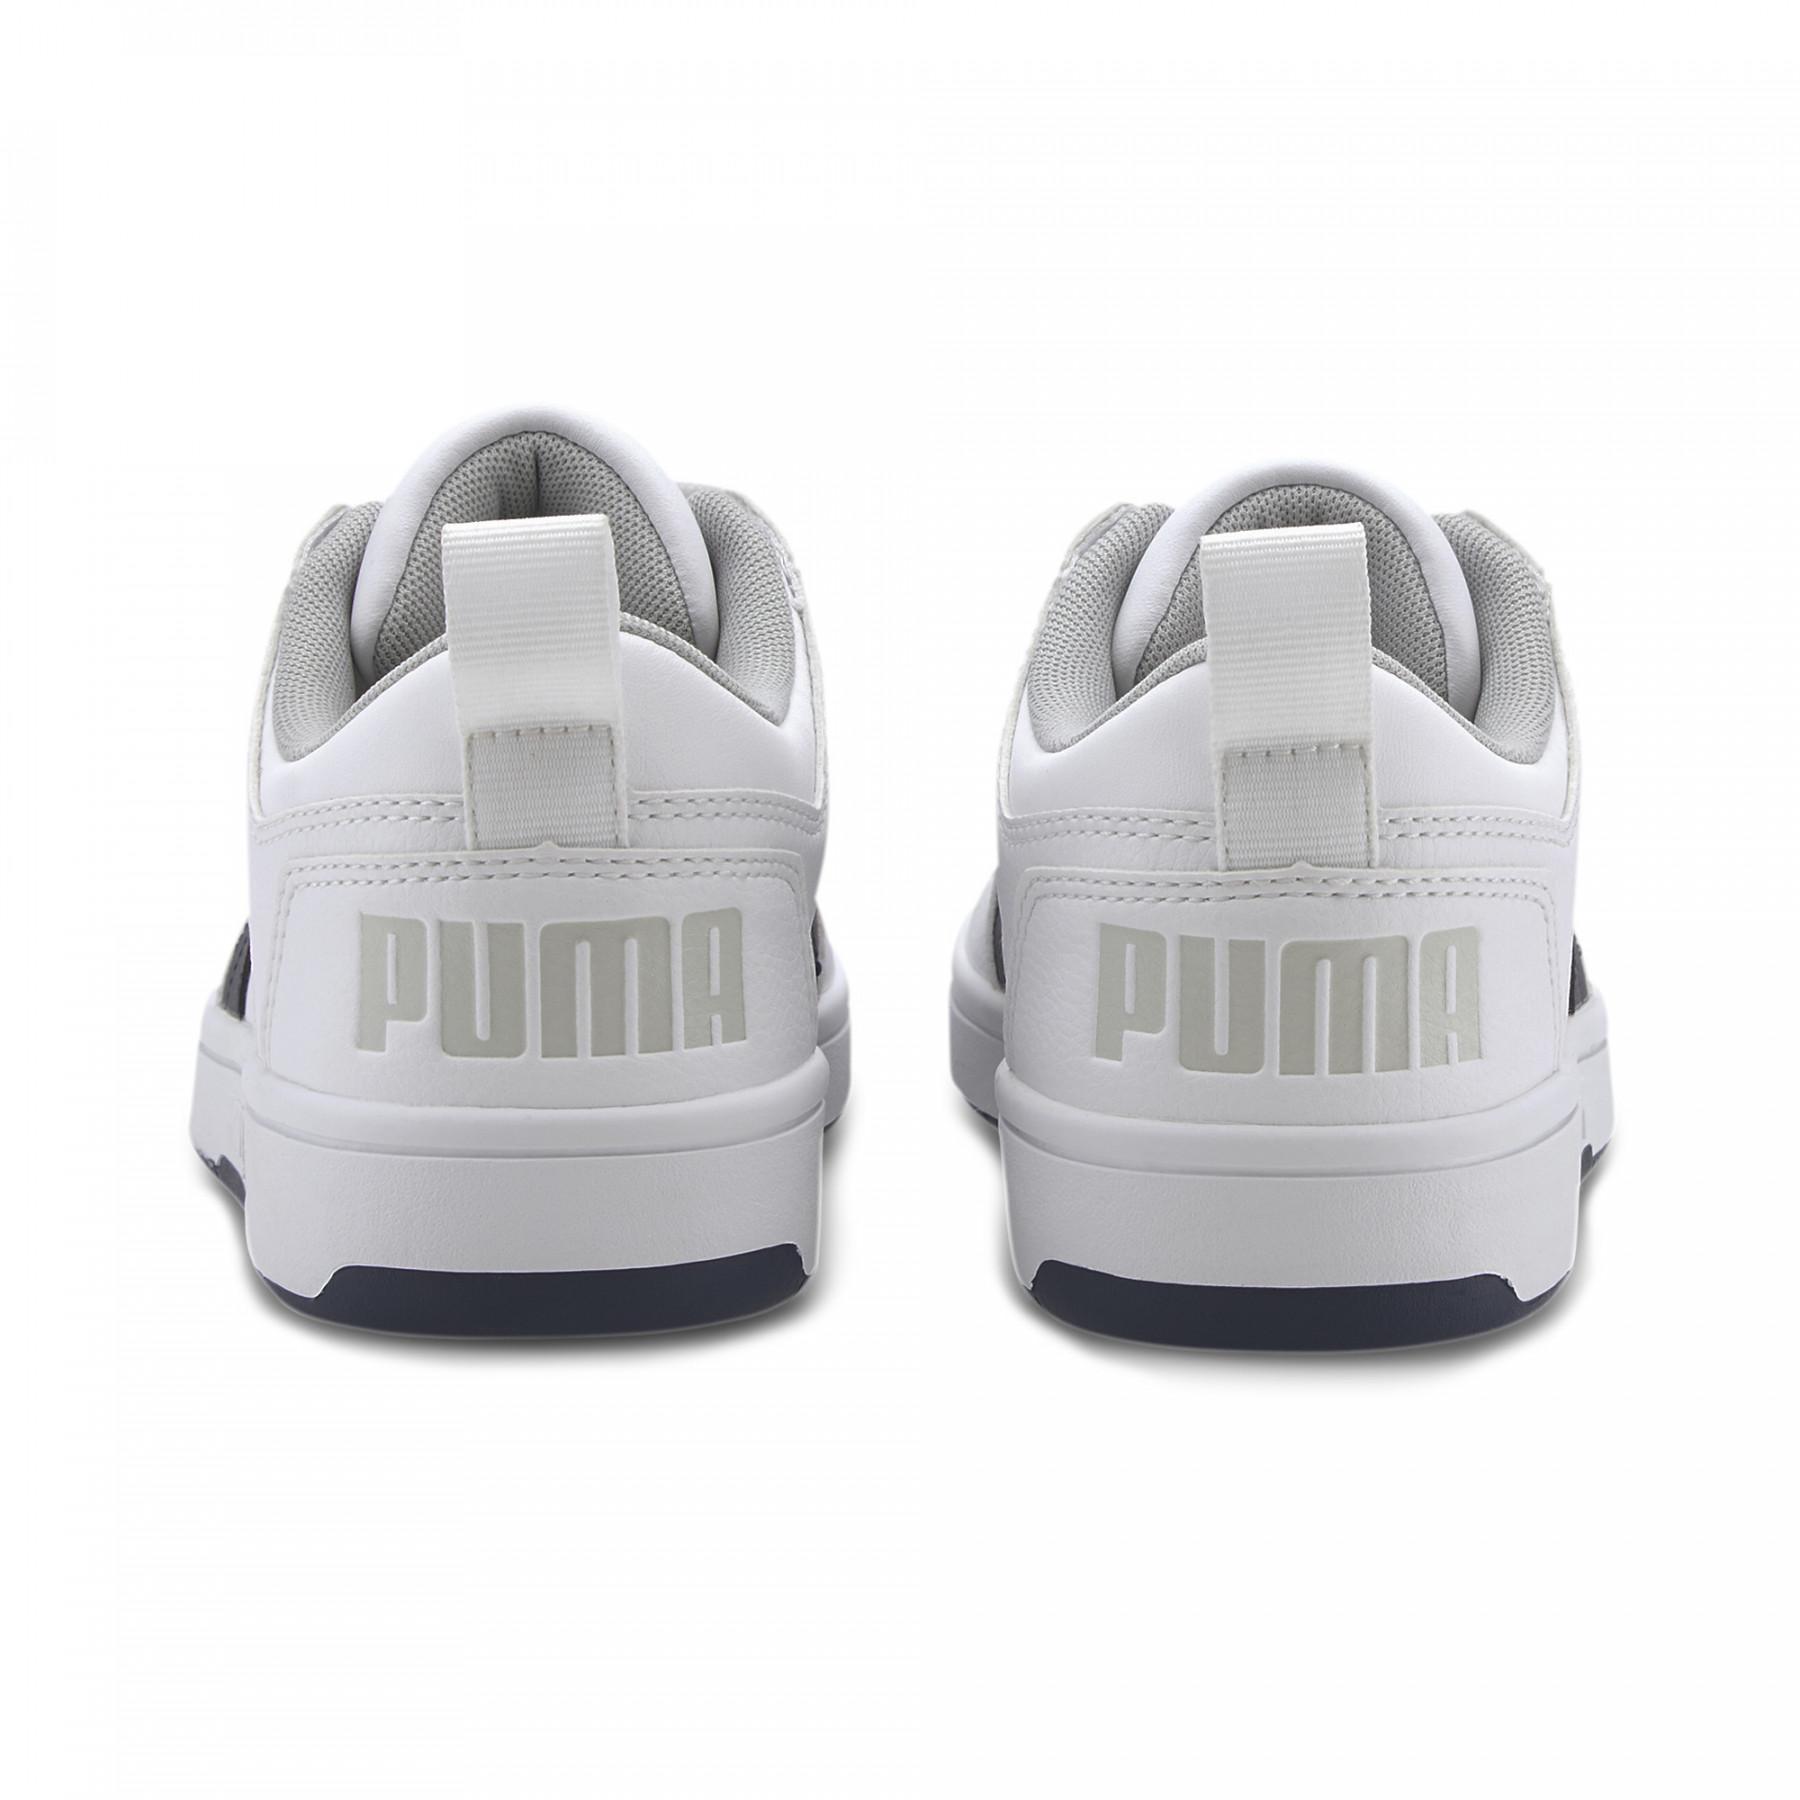 Children's sneakers Puma Rebound Layup Lo SL